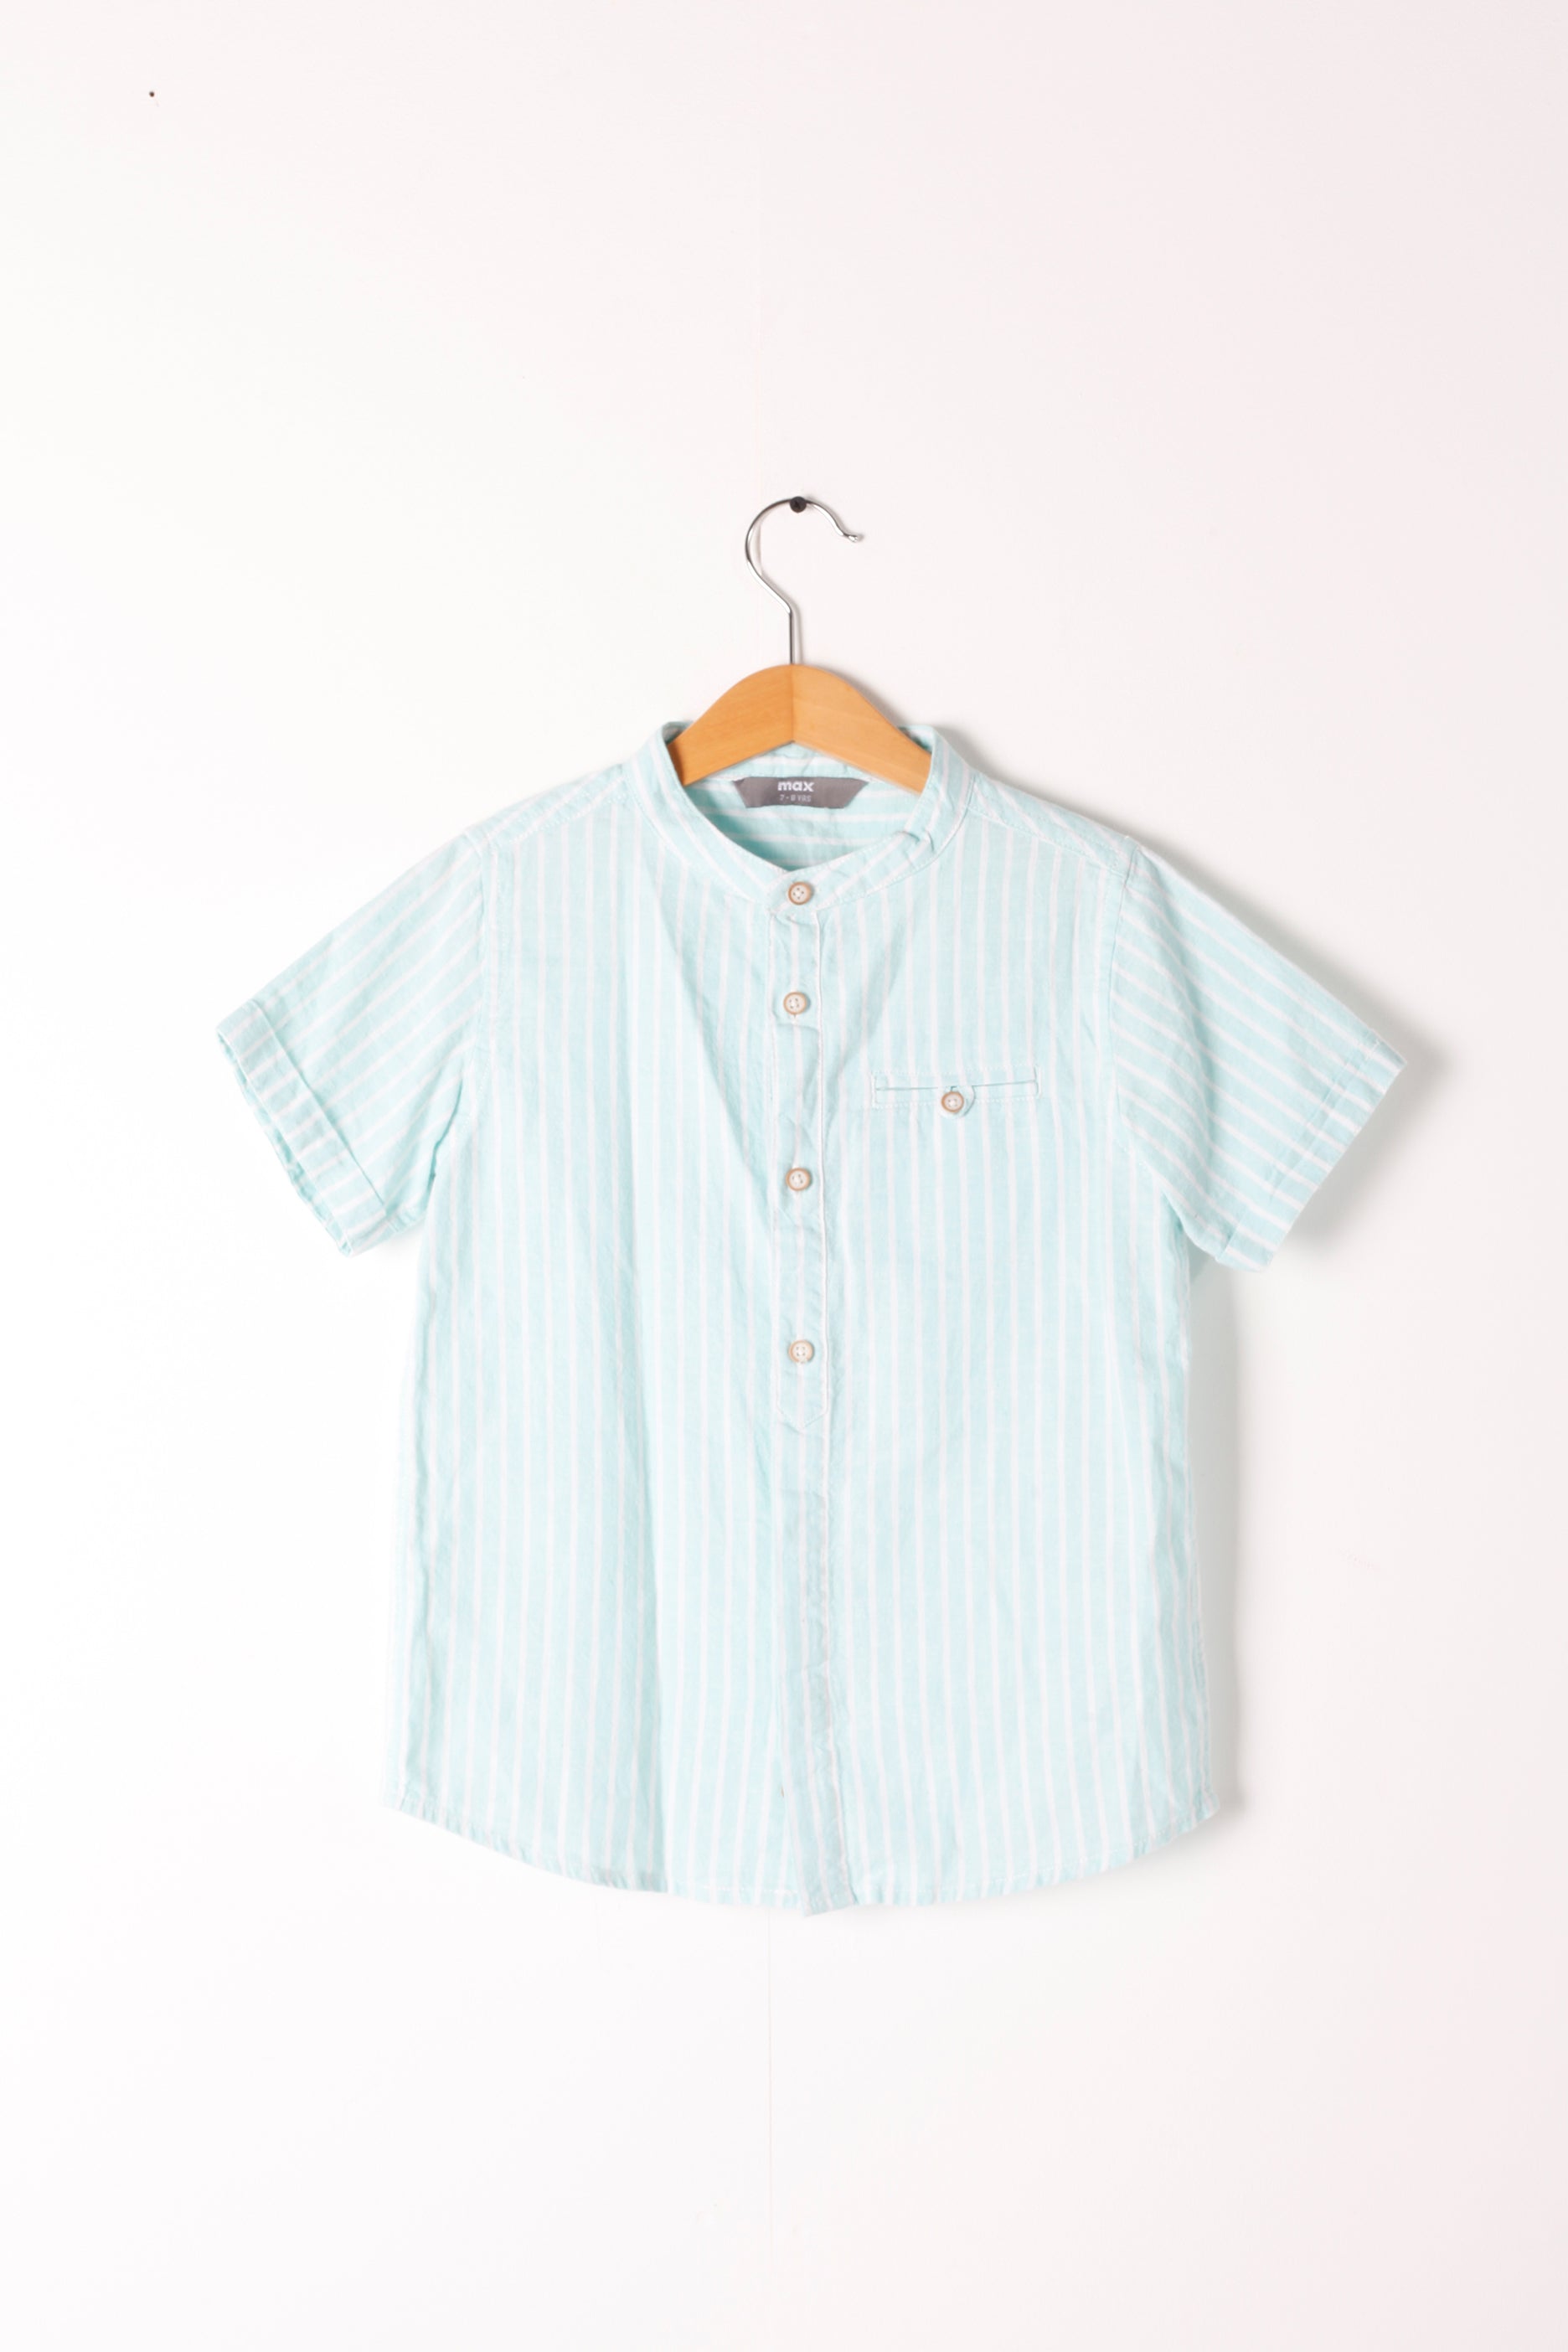 Boys Short Sleeve Turquoise & White Striped Shirt